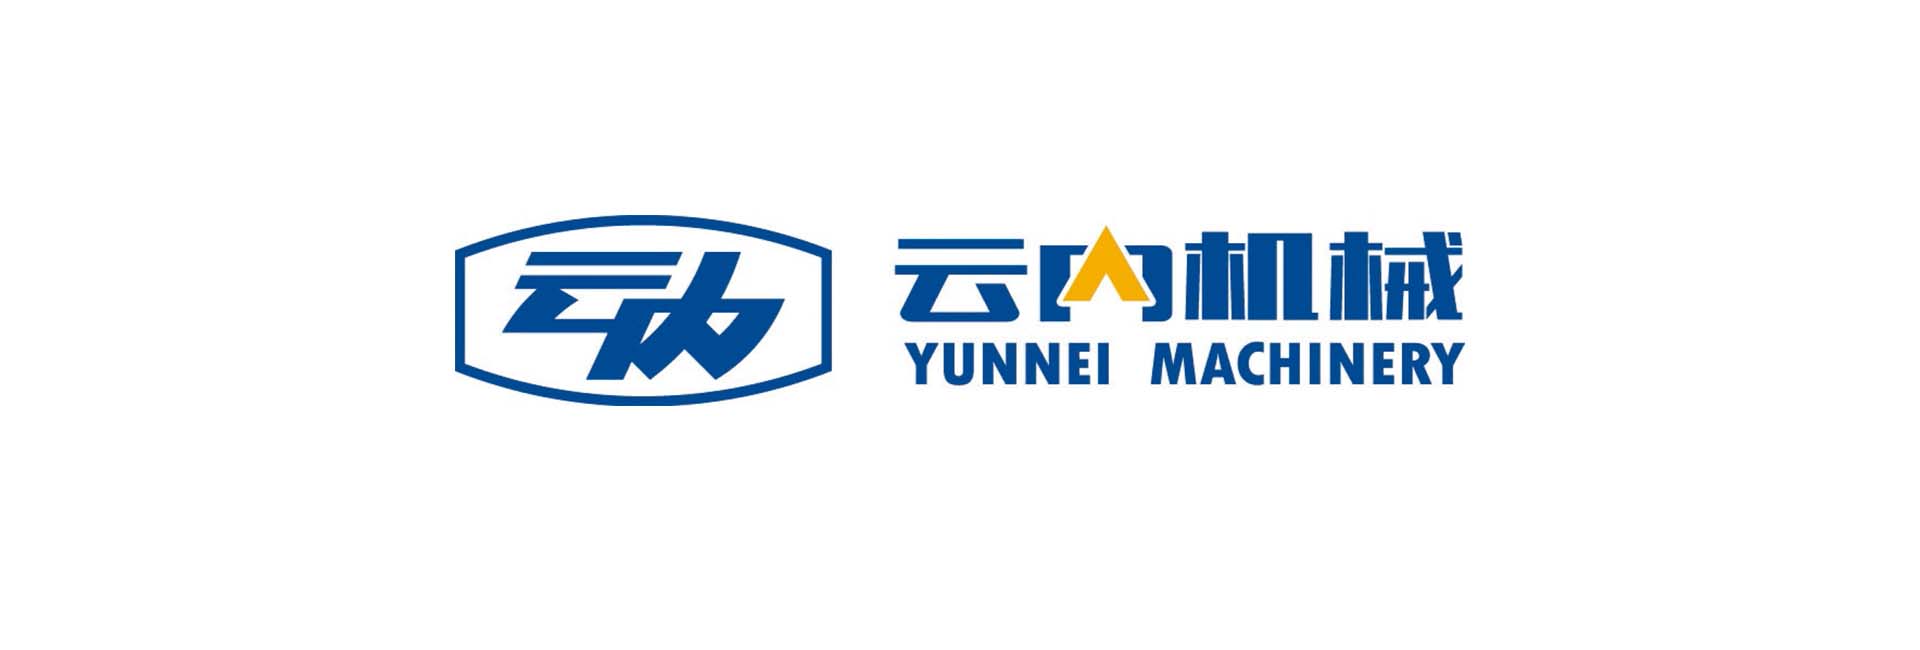 Yunnei Machinery Logo